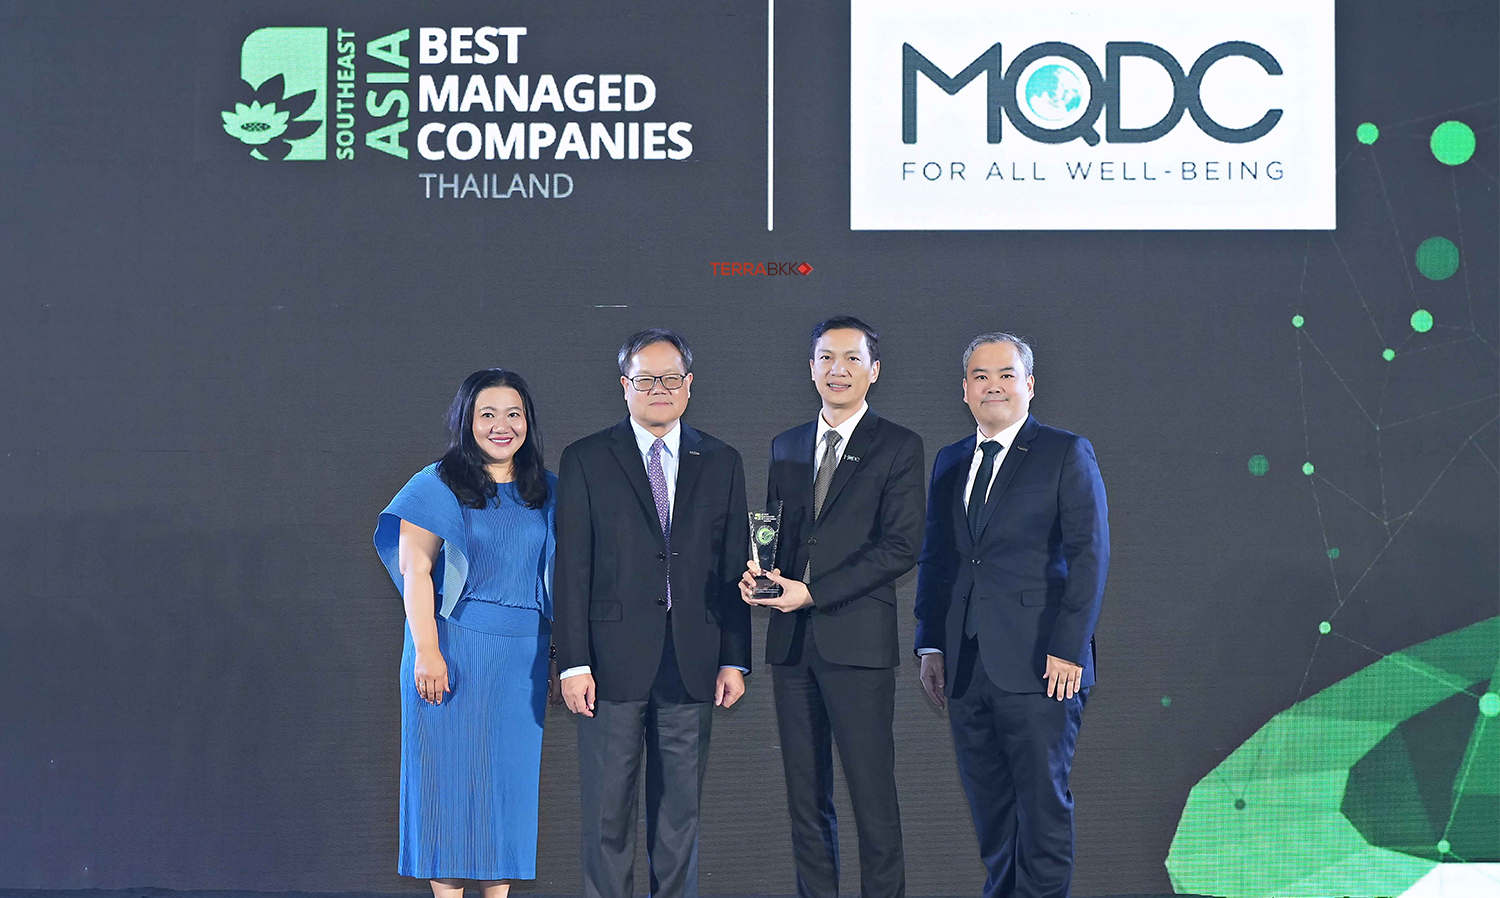 MQDC ชนะรางวัล “Thailand’s Best Managed Companies” ประจำปี 2566  เป็นปีที่ 2 ติดต่อกัน